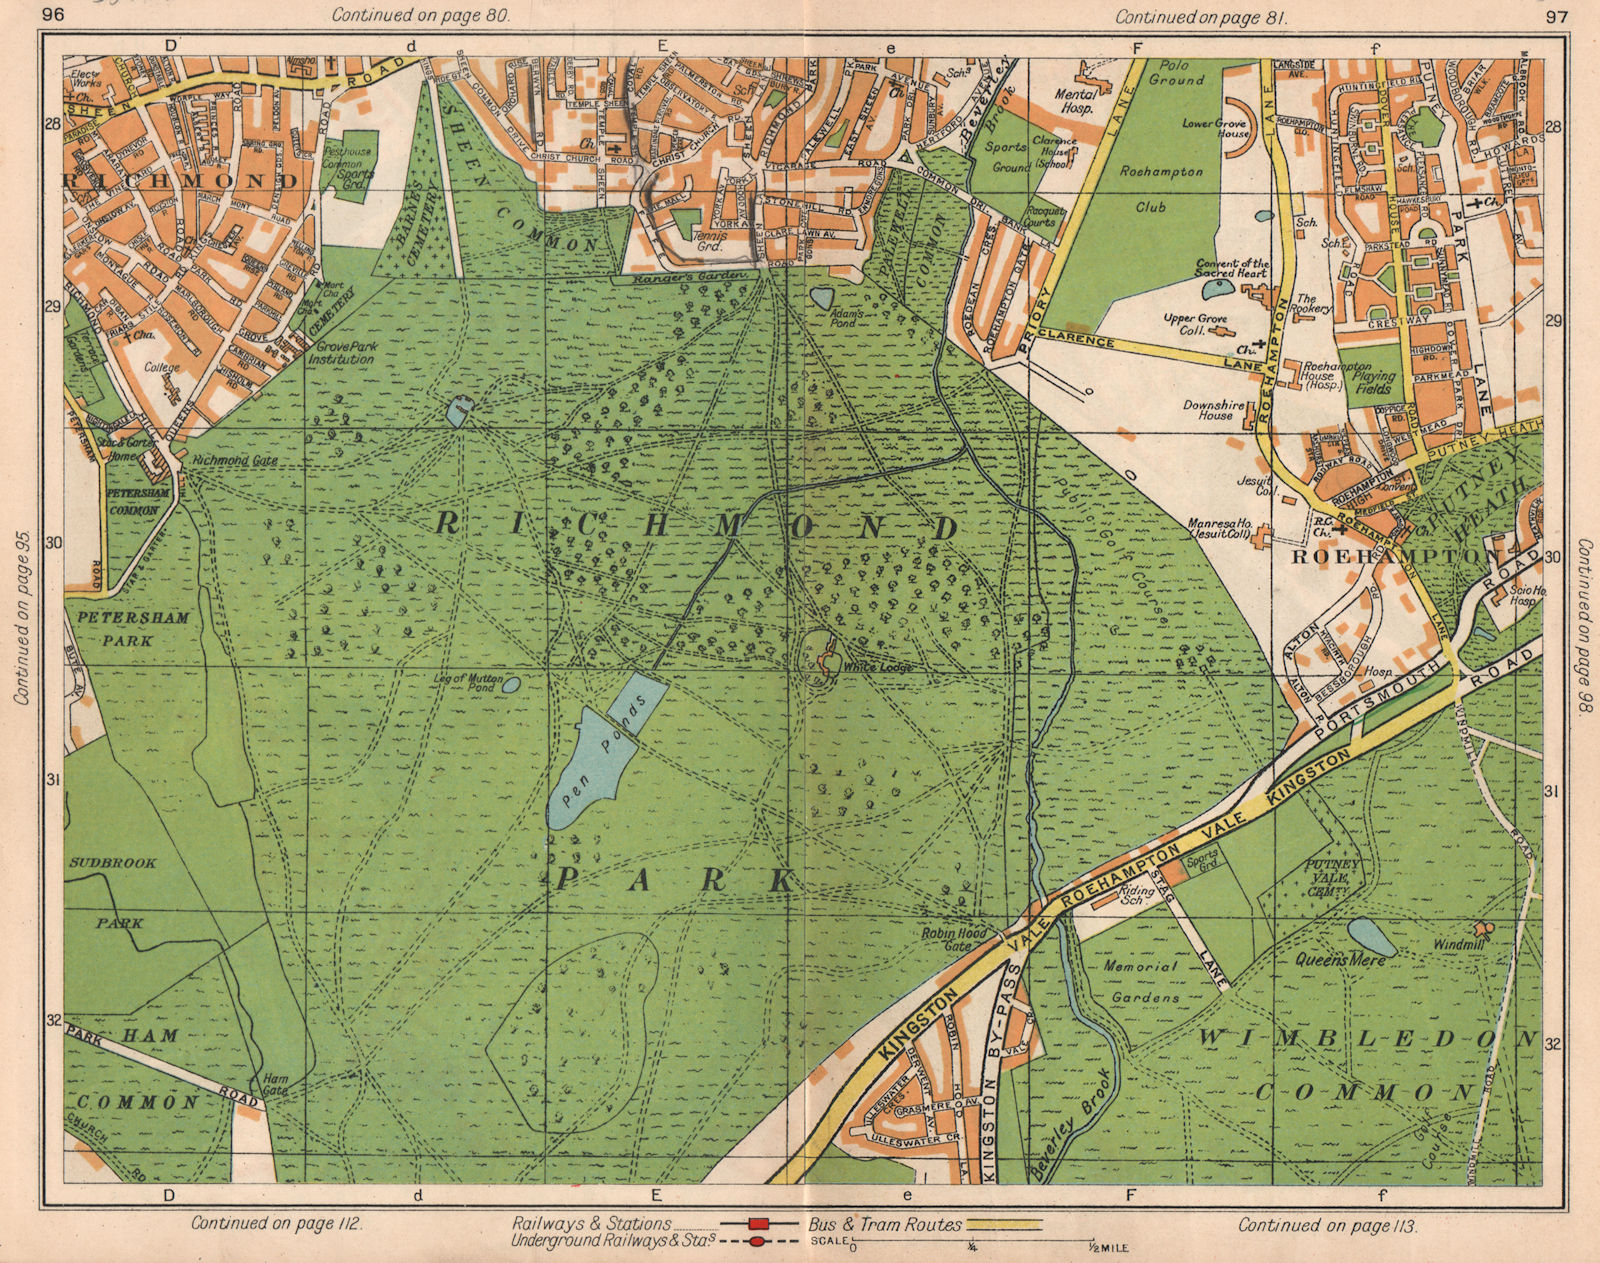 RICHMOND PARK. East Sheen Roehampton Kingston Vale Wimbledon Common 1938 map